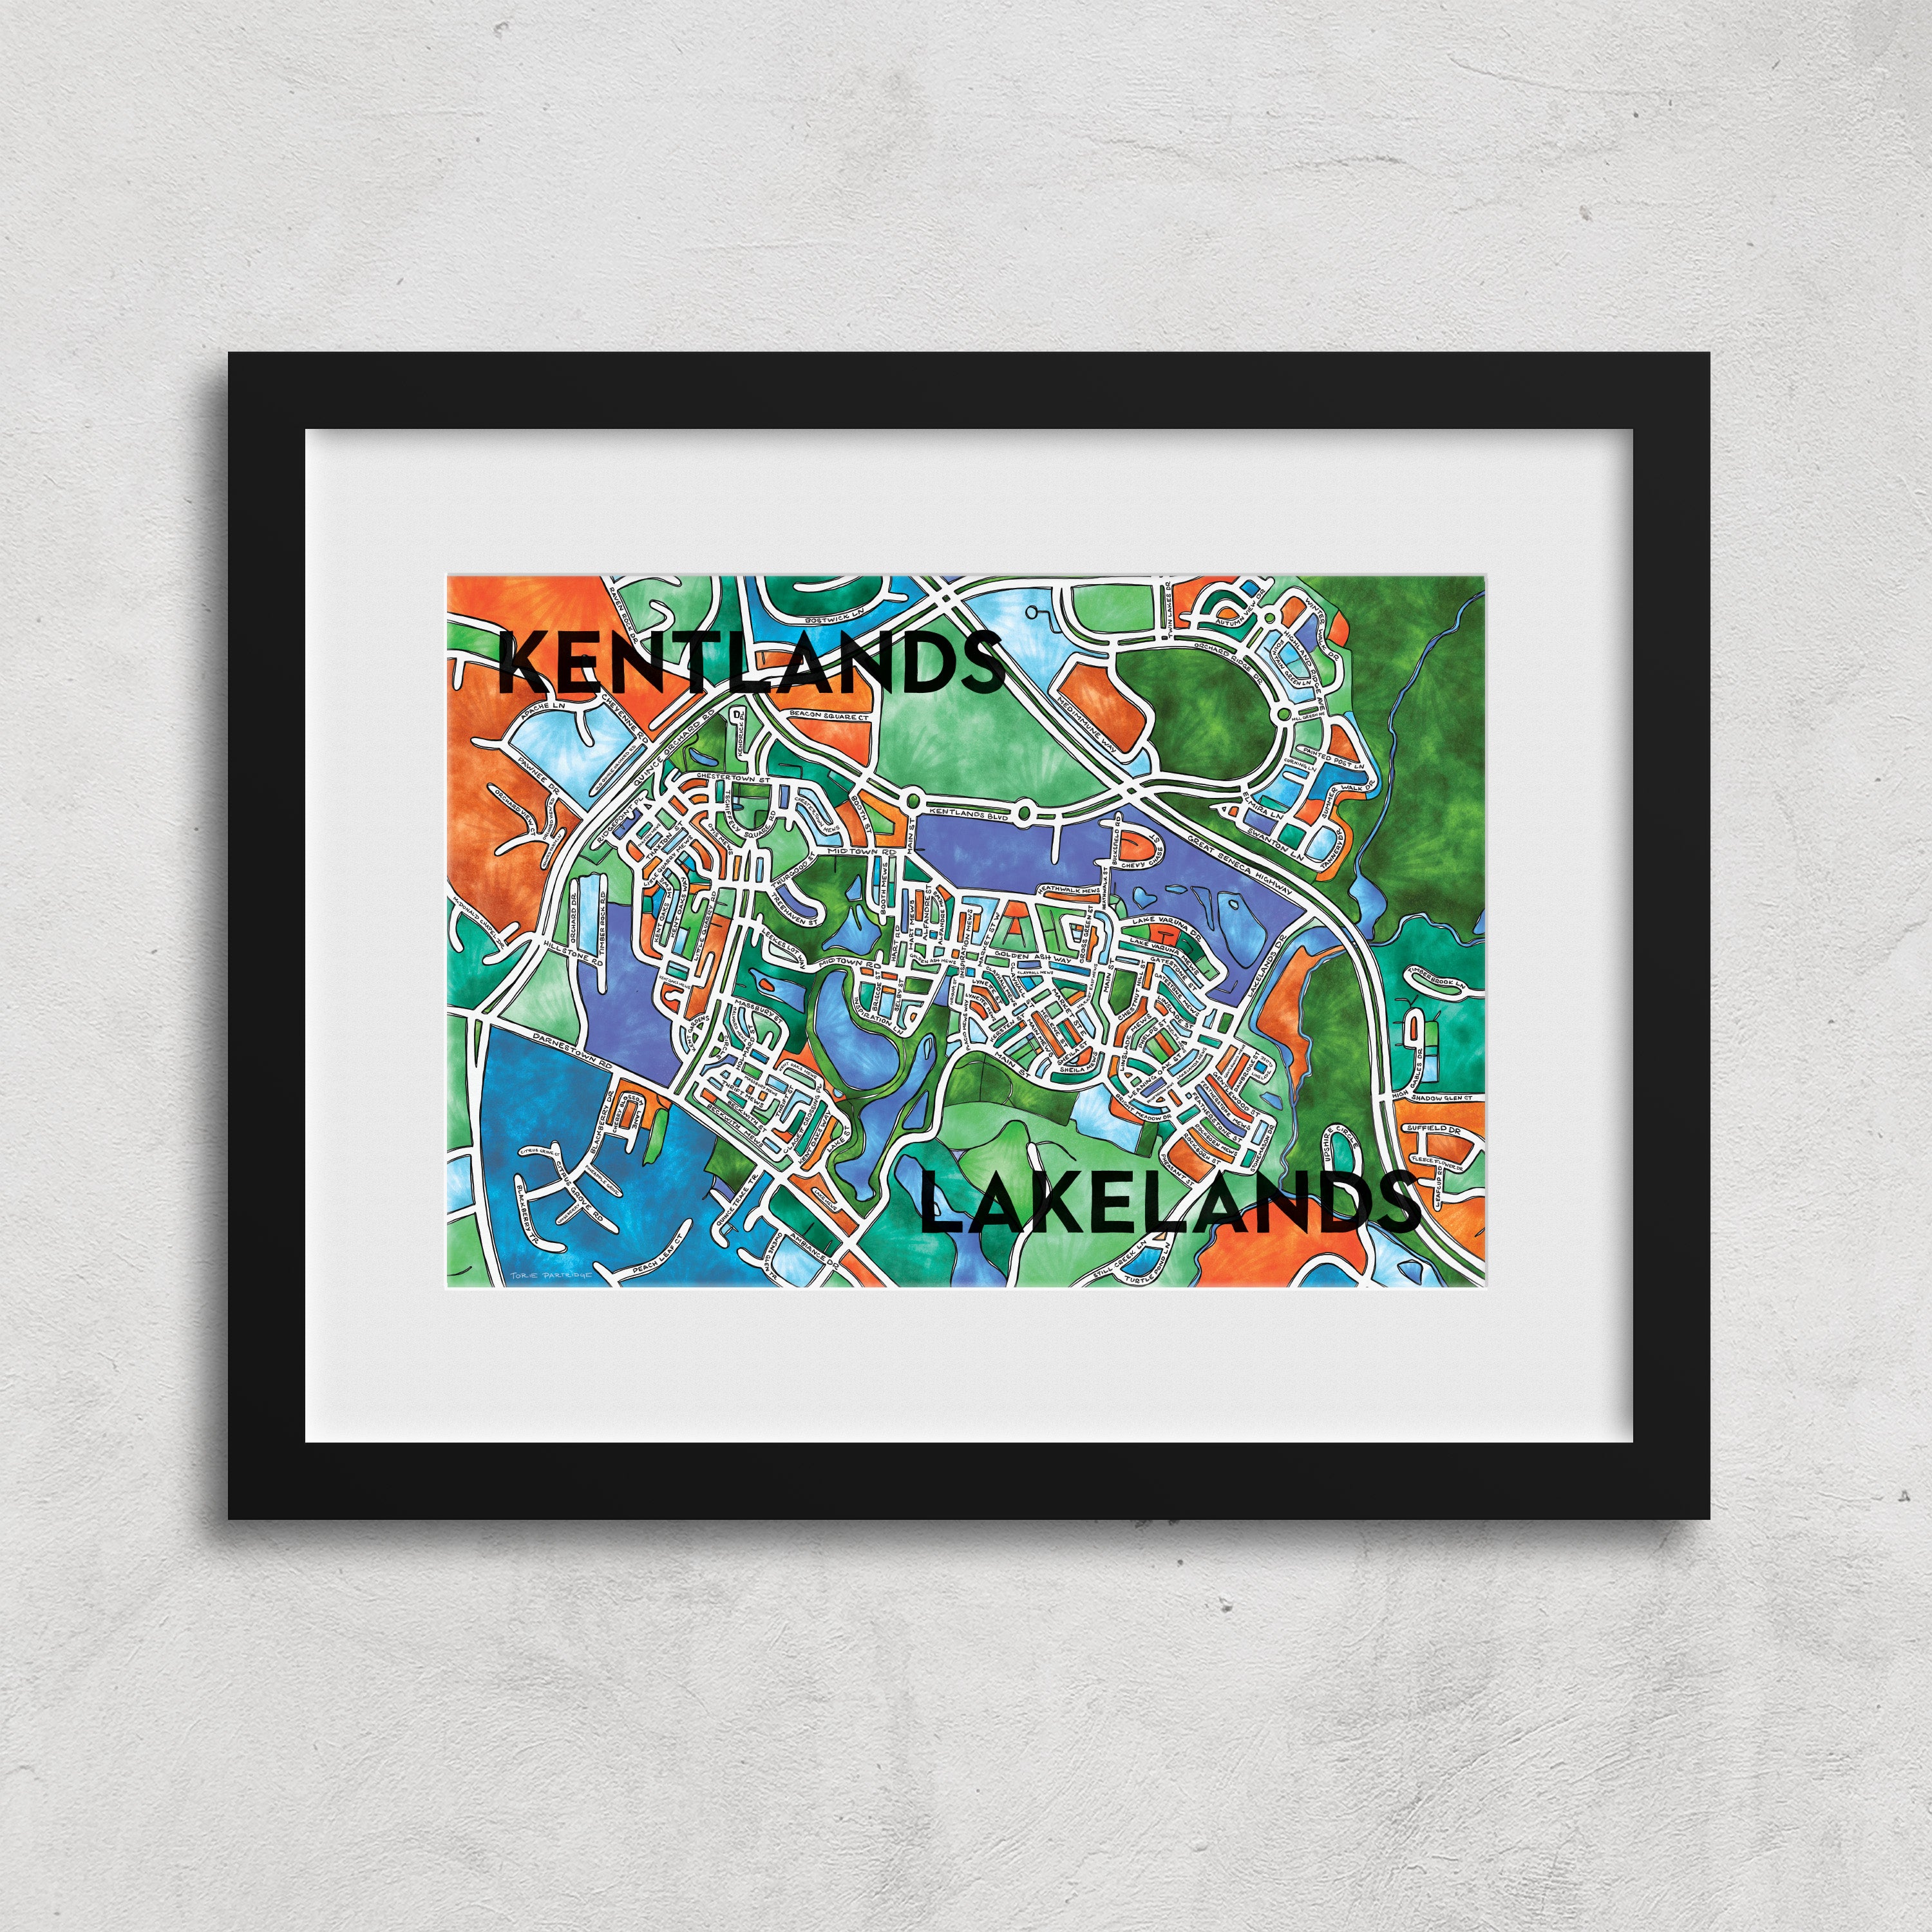 Kentlands Lakelands Print